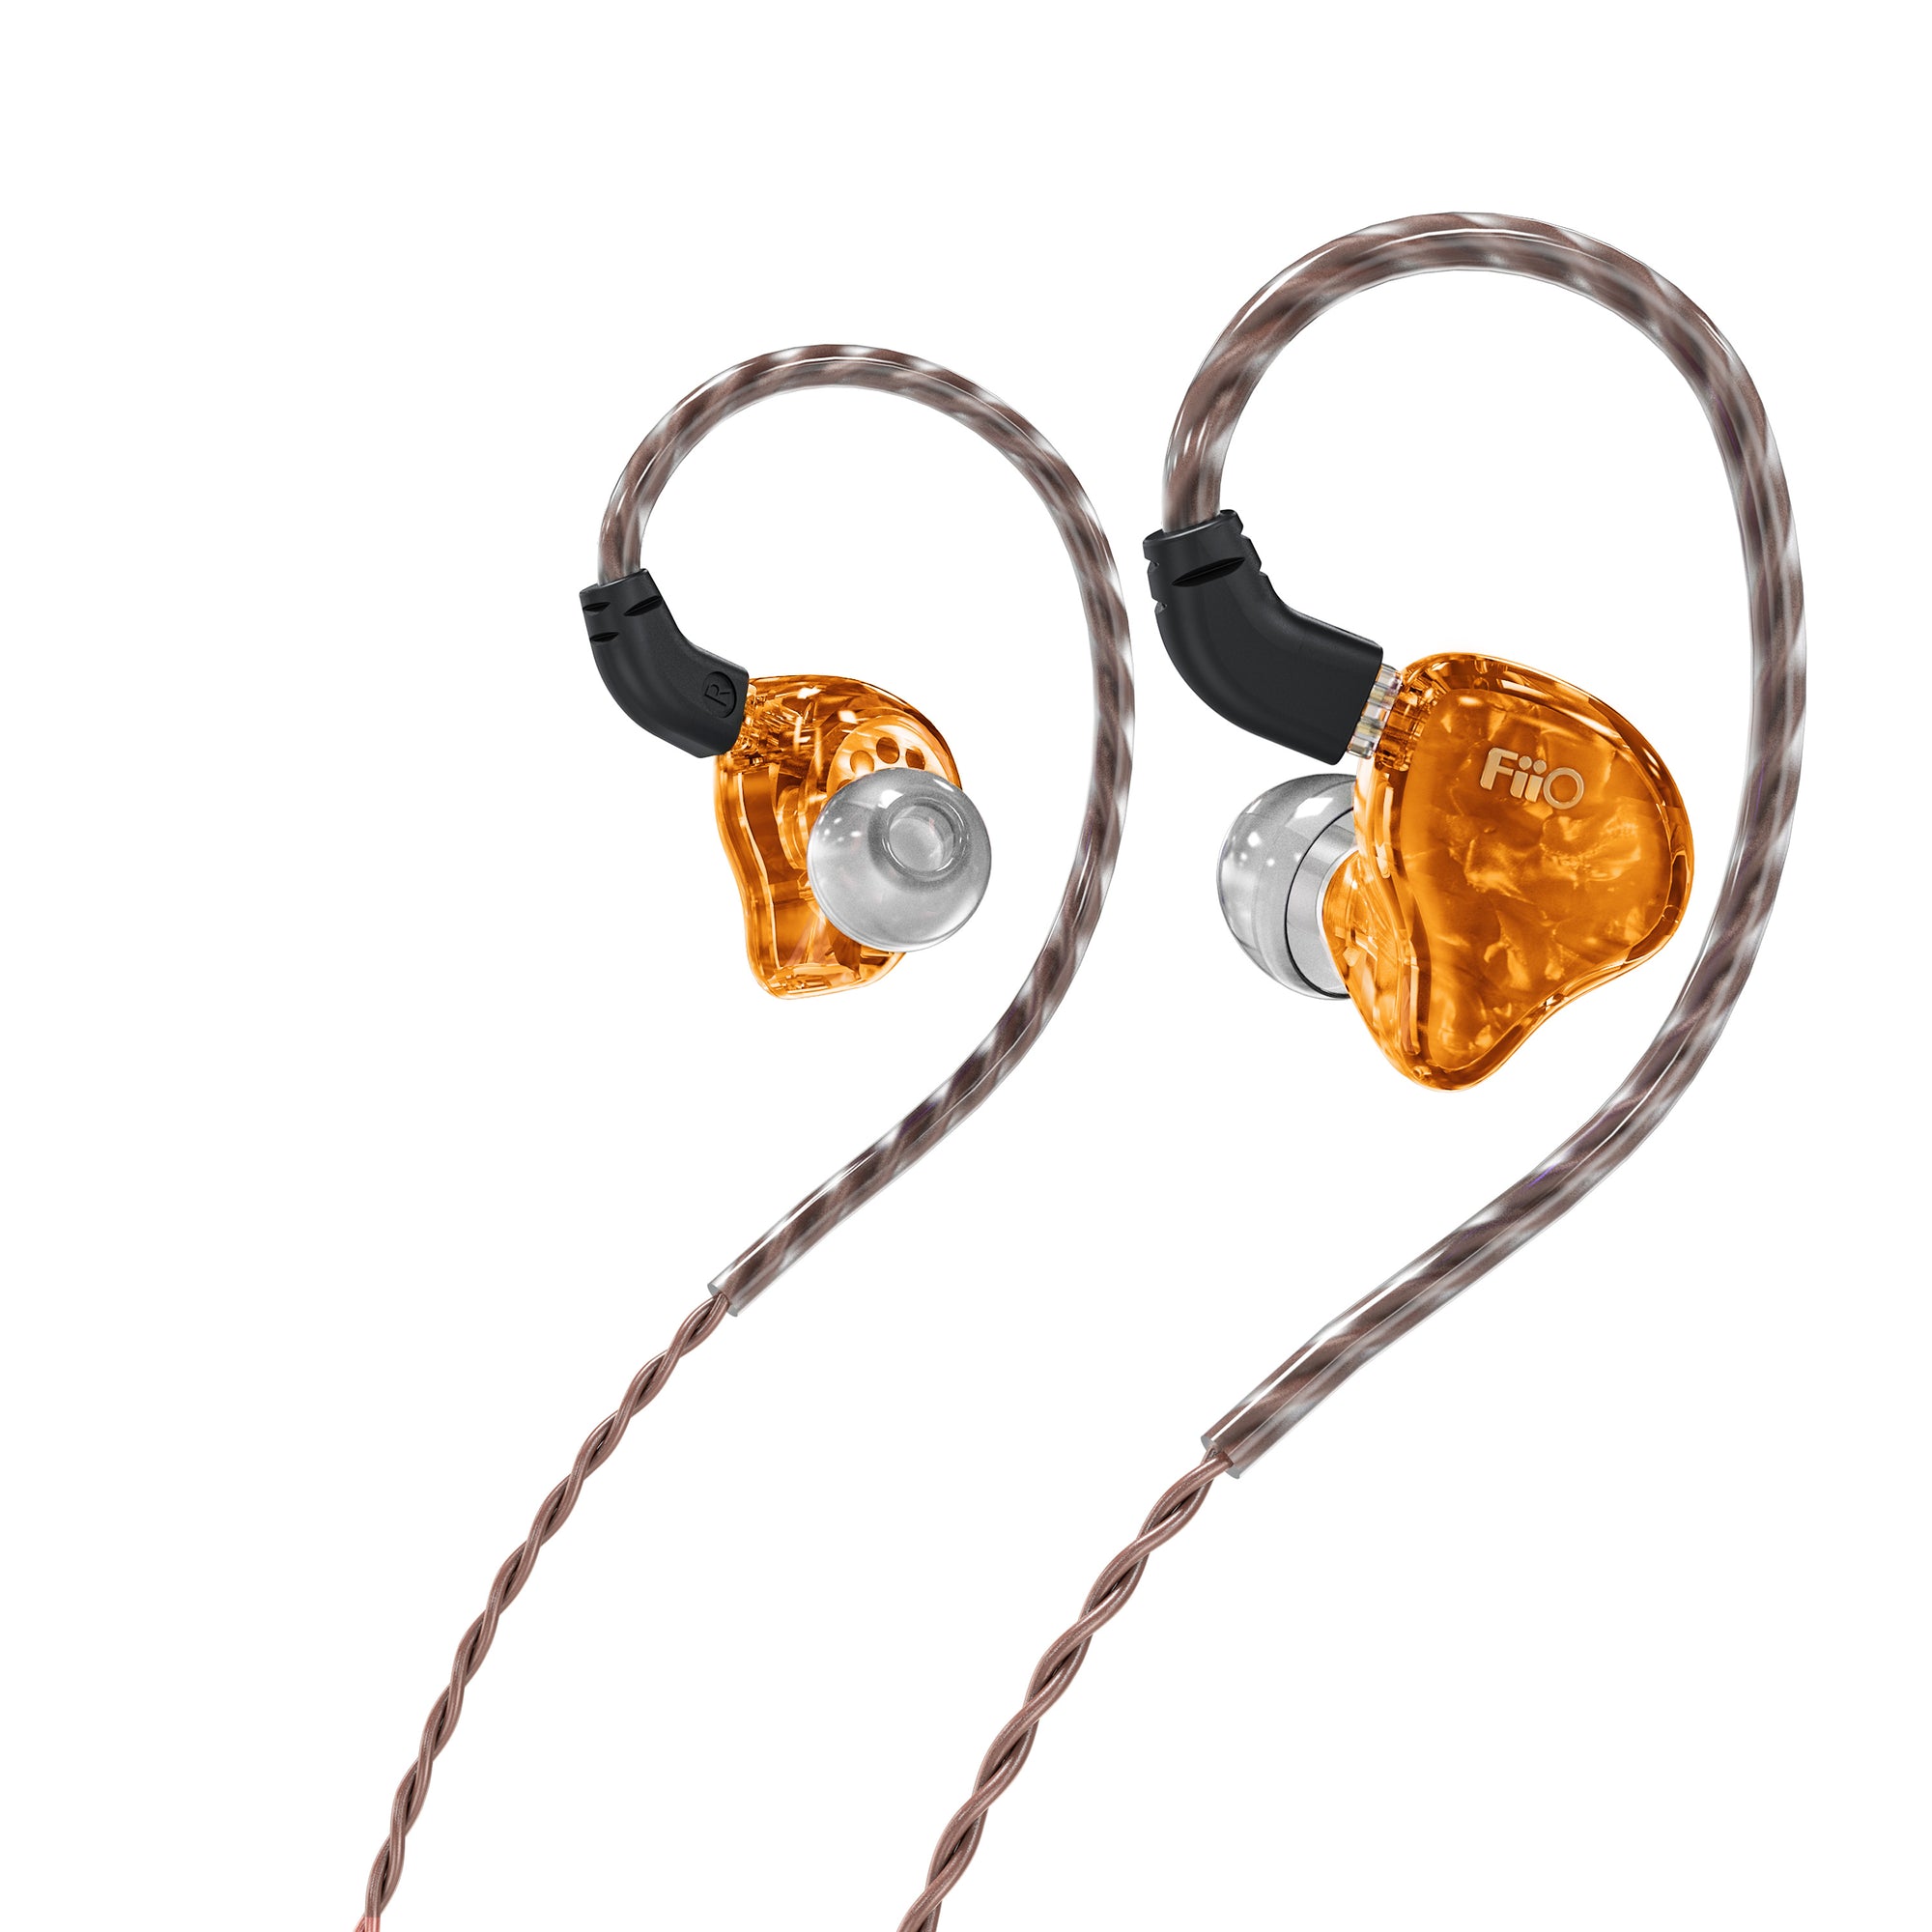 FiiO FH1S Hybrid In-Ear Monitor - Gears For Ears